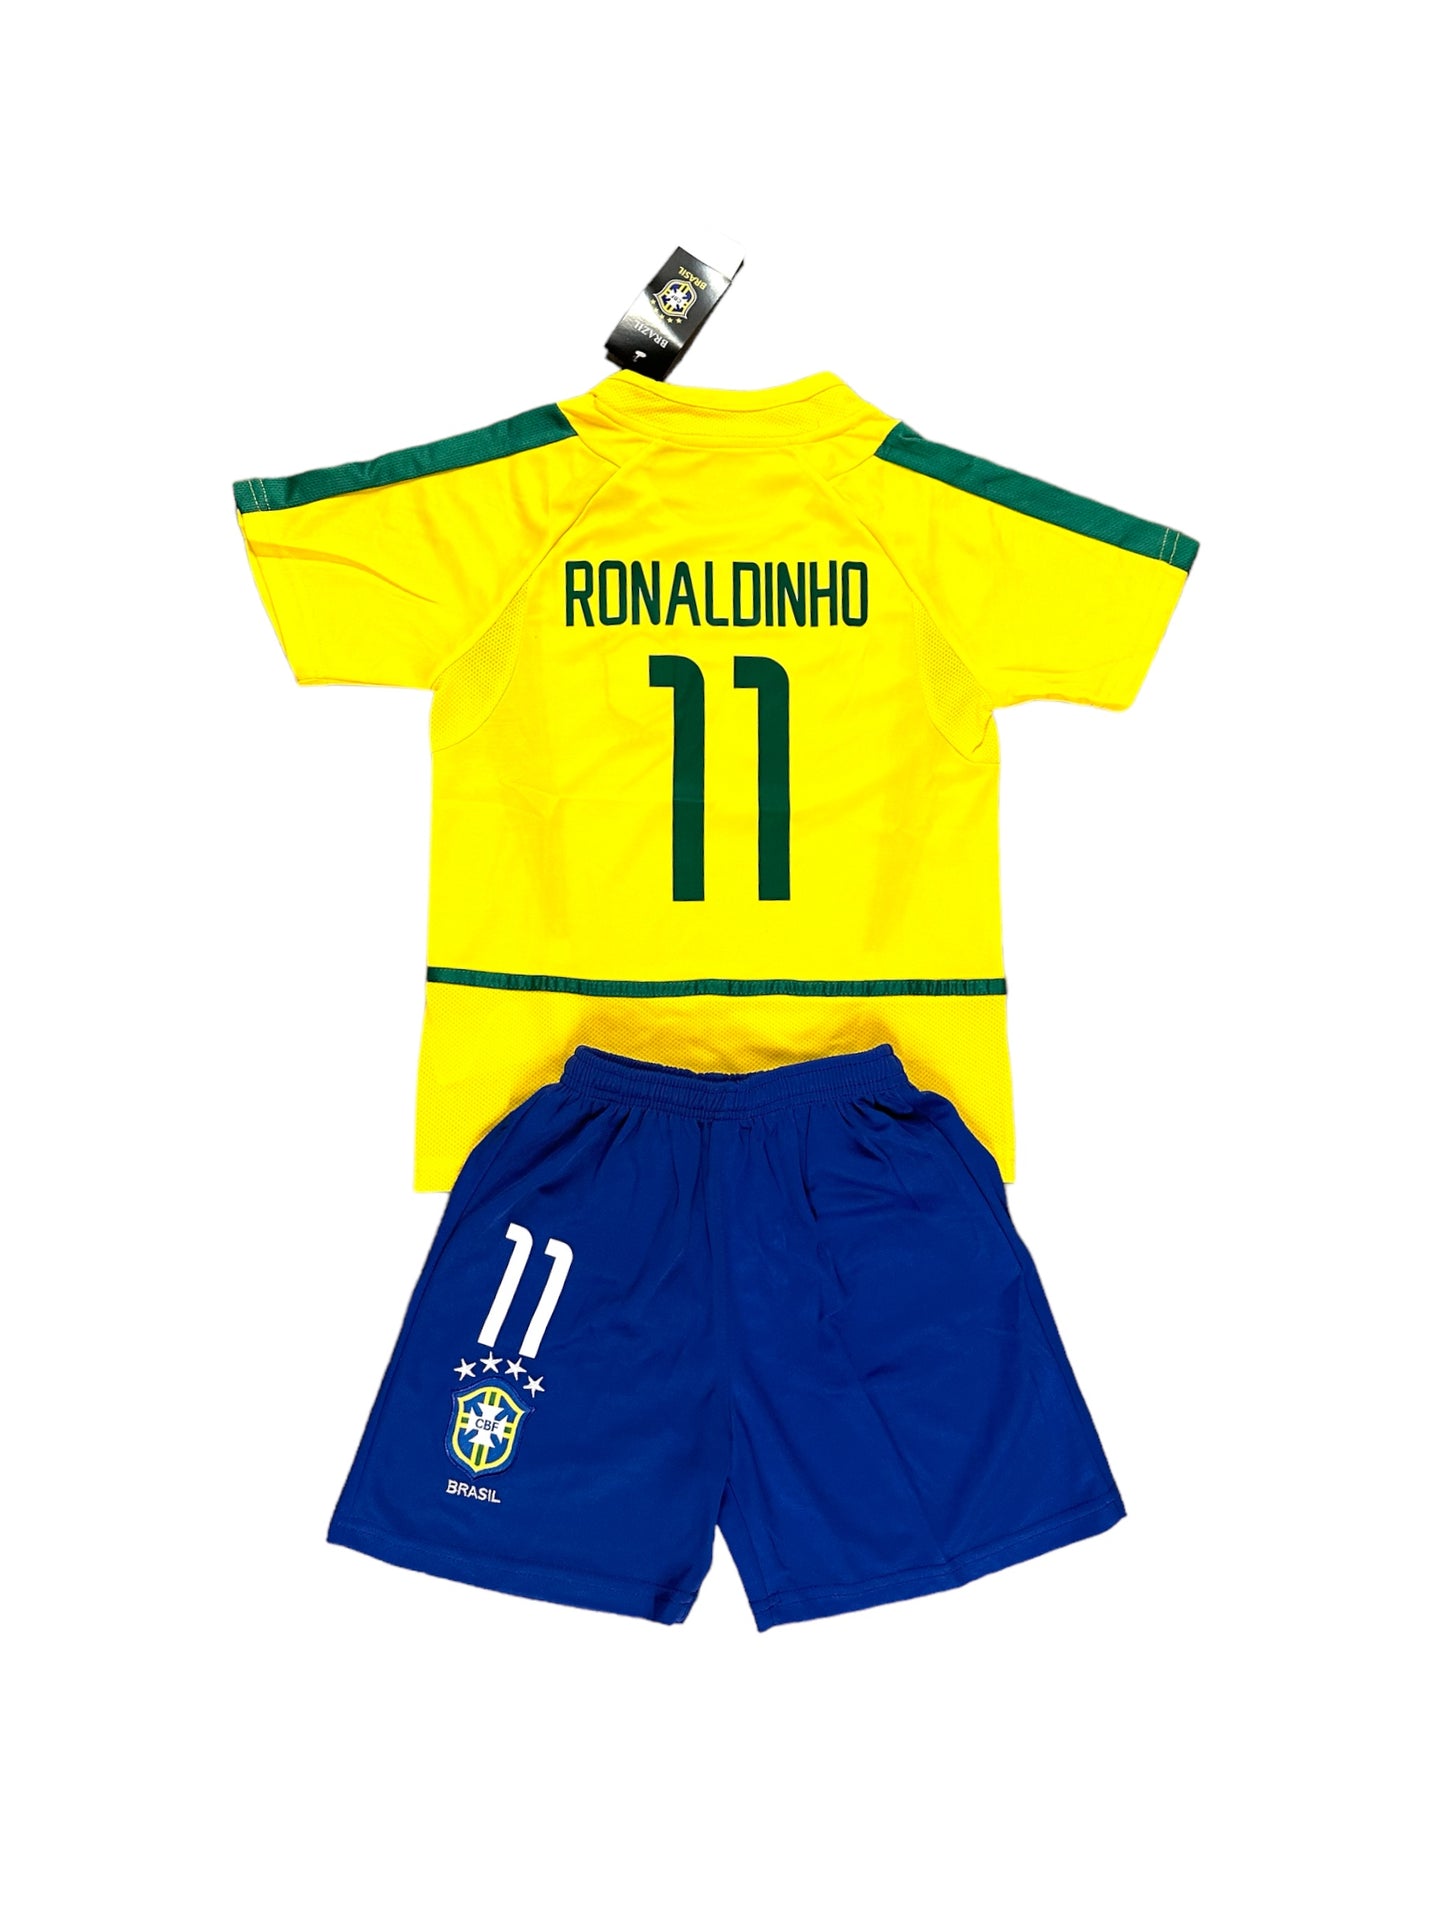 Ronaldinho #11 Brazil Retro Youth soccer set